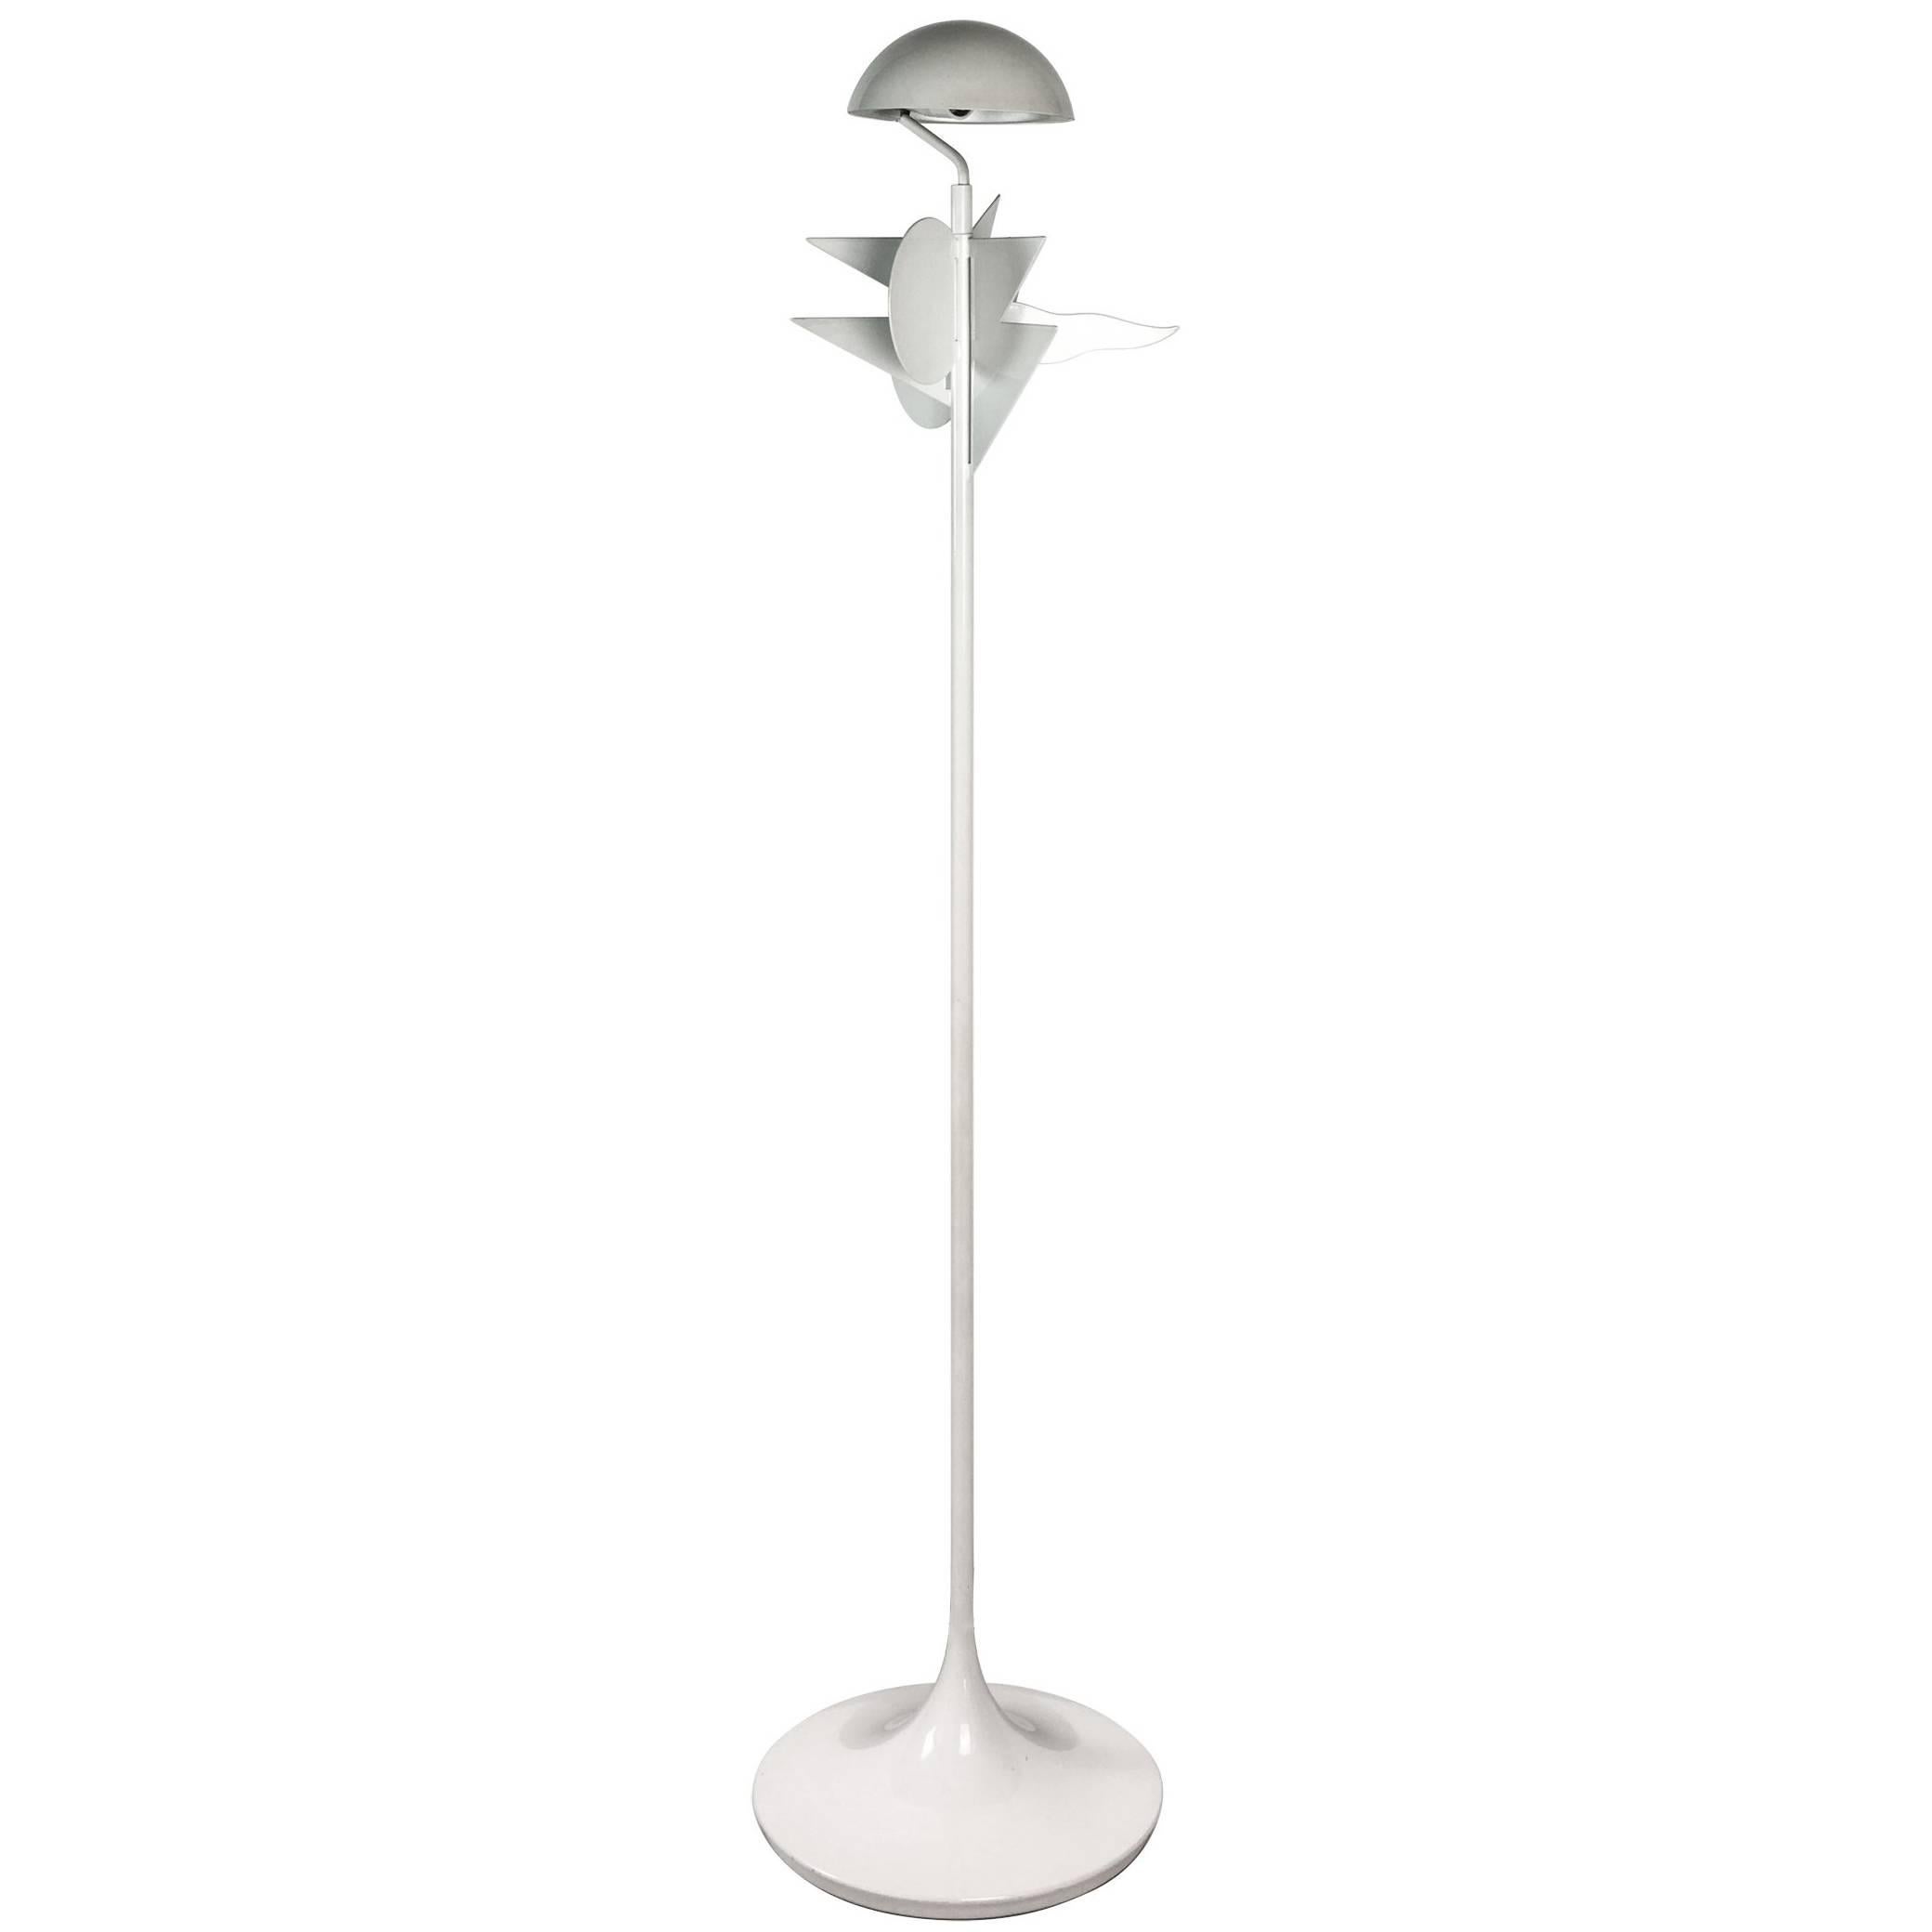 Alessandro Mendini Rare Floor Lamp For Sale